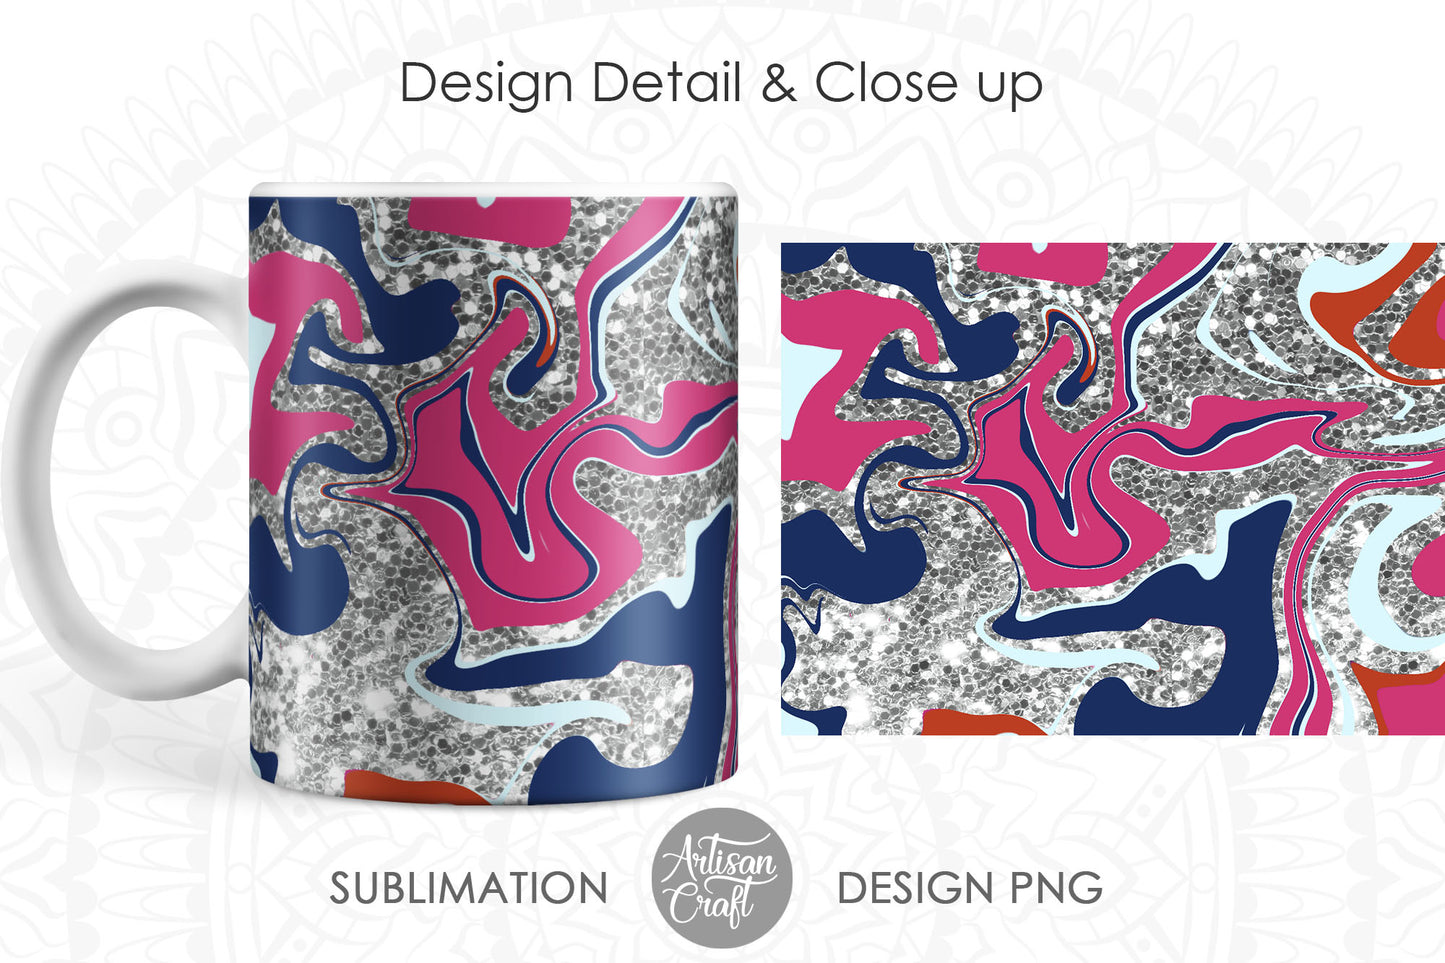 11oz Mug sublimation design with fluid art